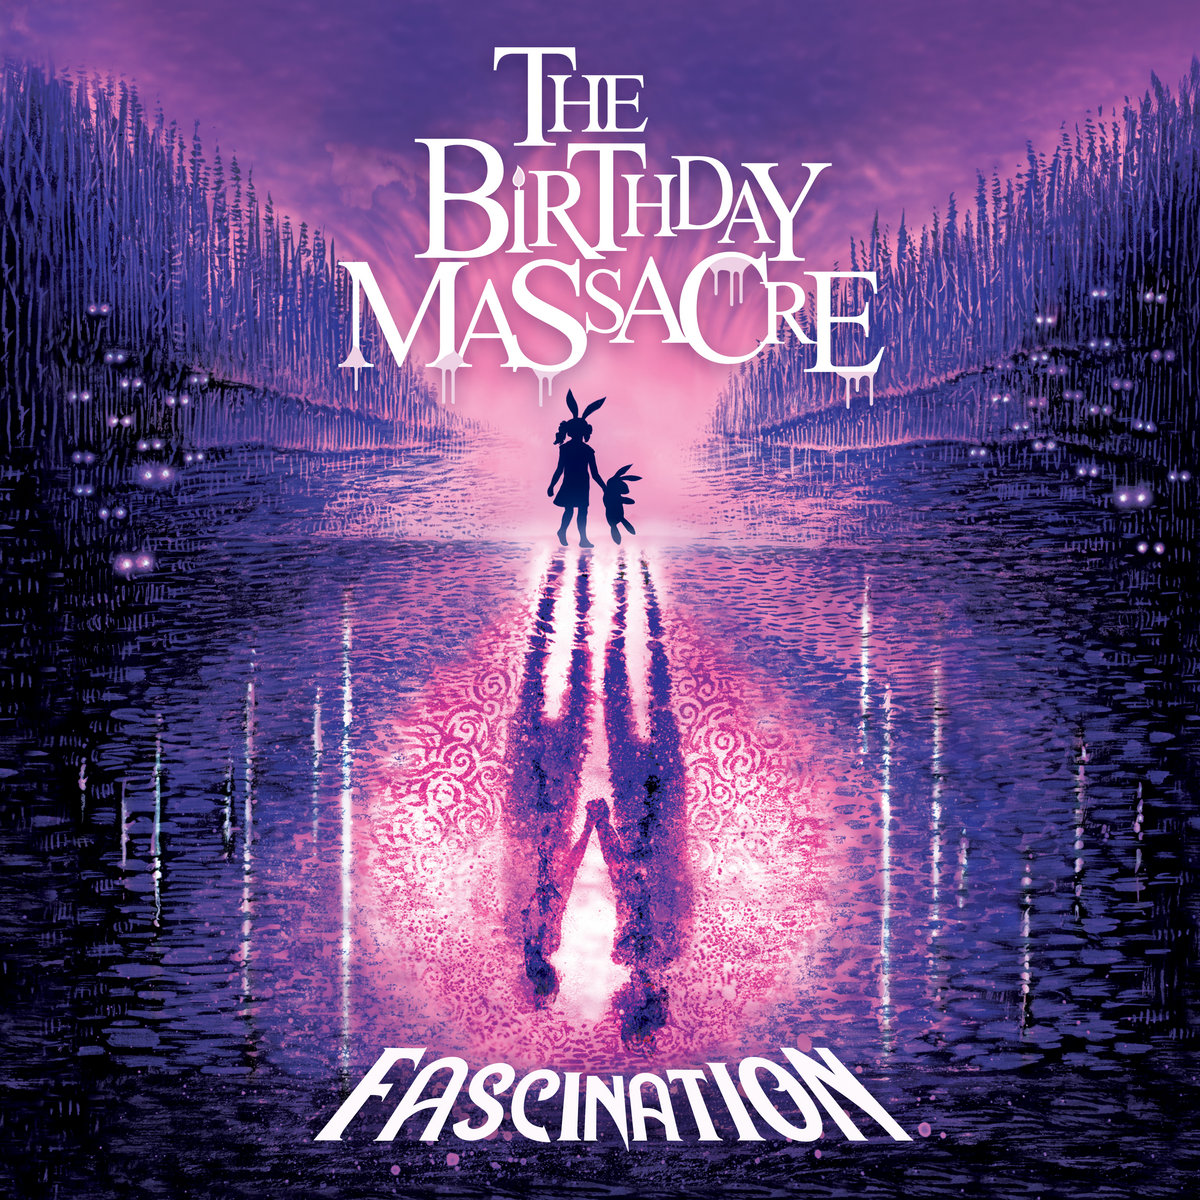 The Birthday Massacre, “Fascination”